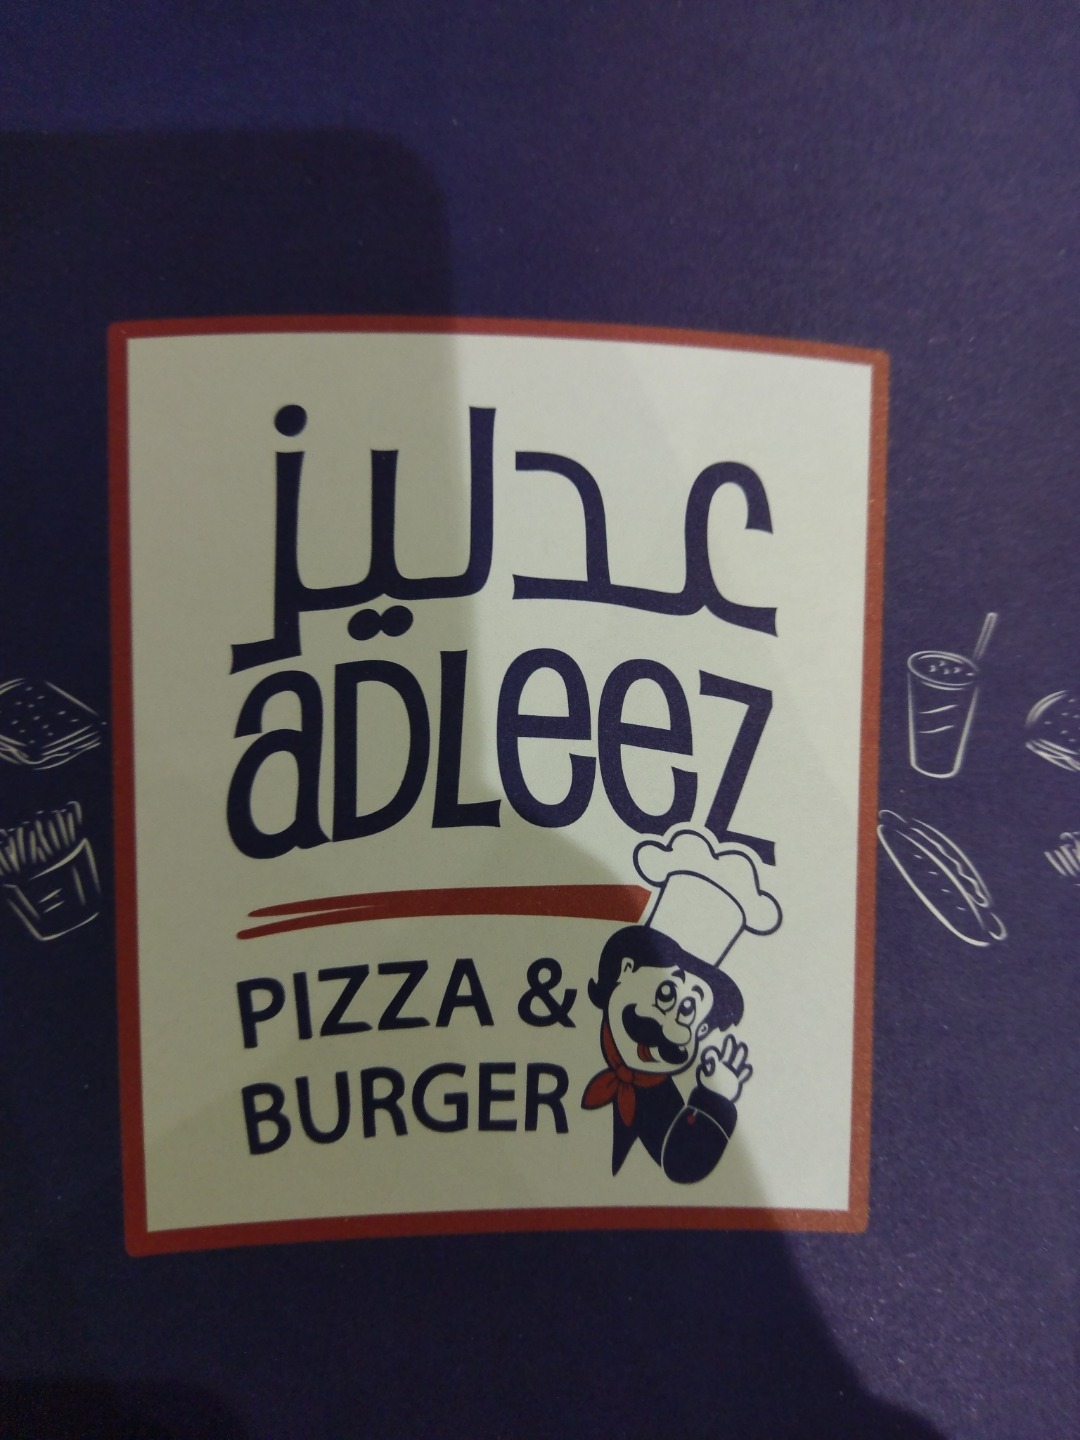 Adleez Resturant - Bahrain